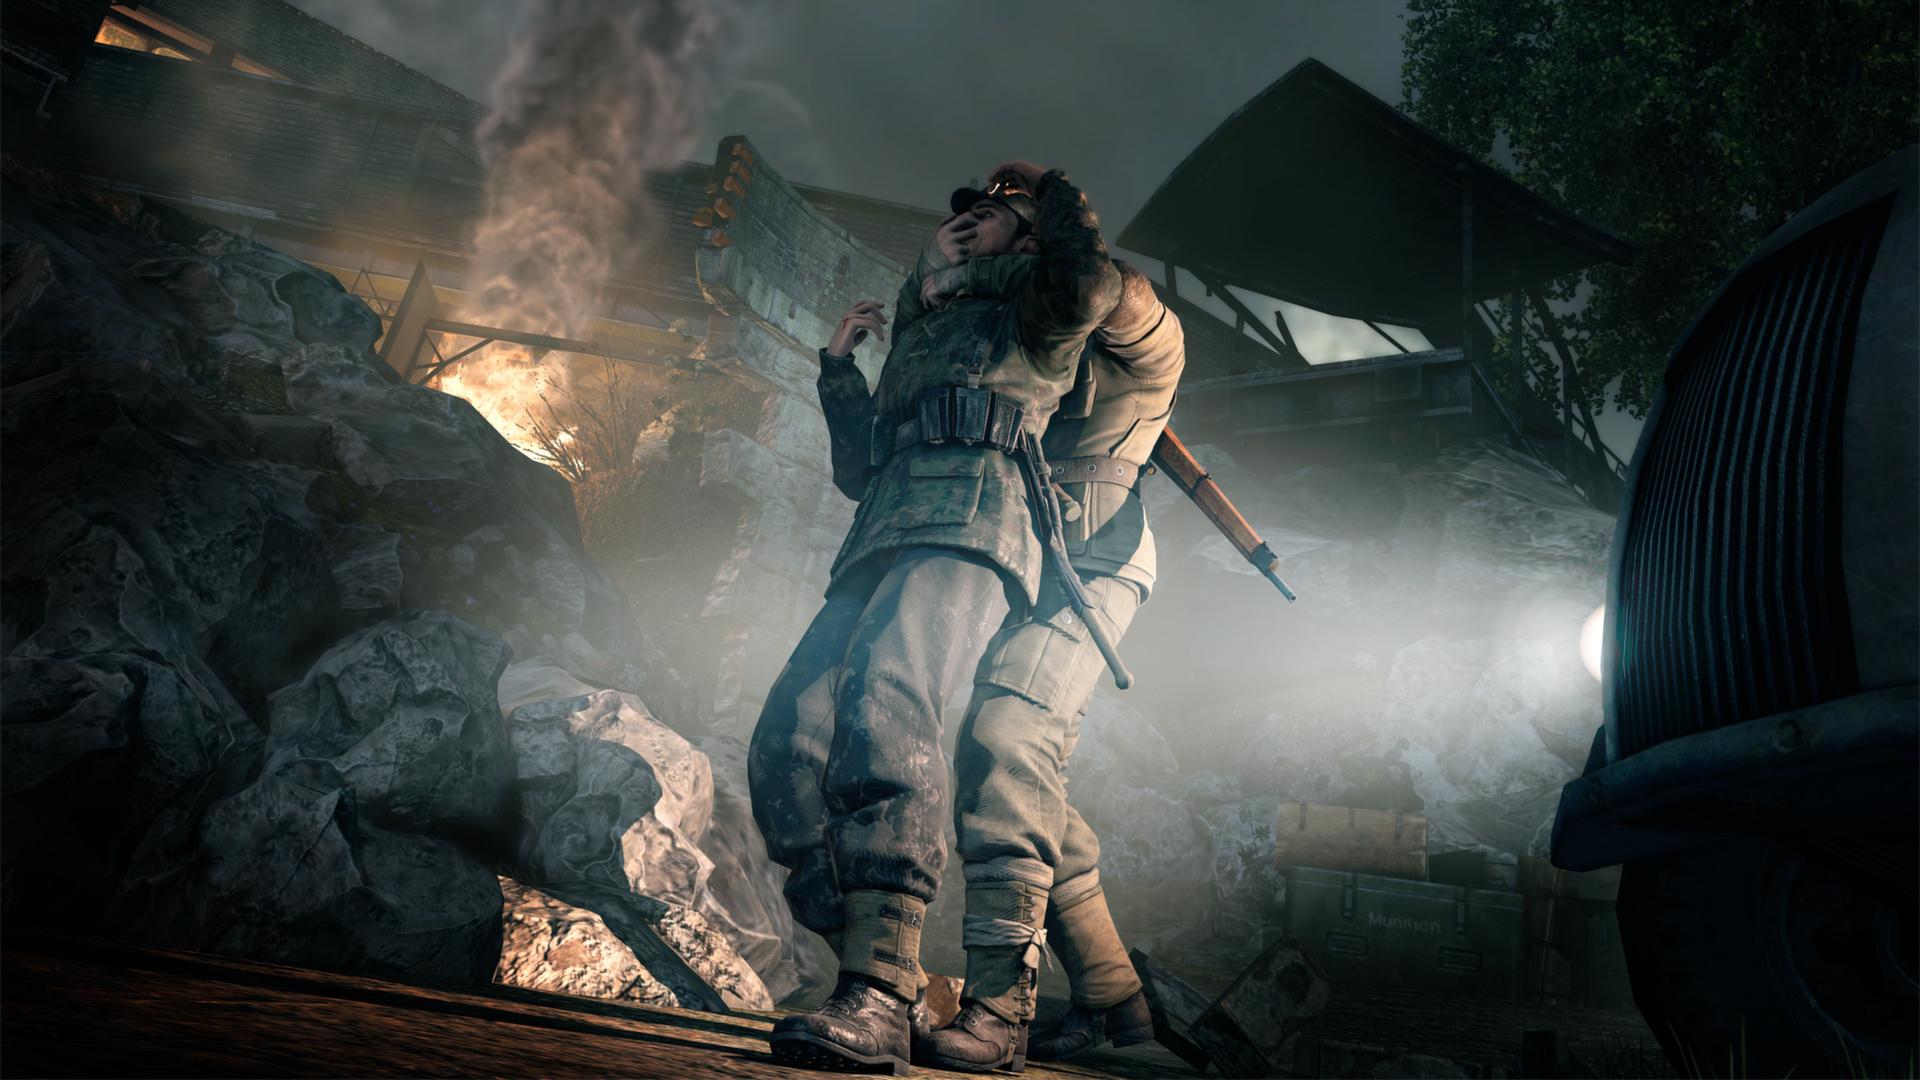 Screenshot №18 from game Sniper Elite V2